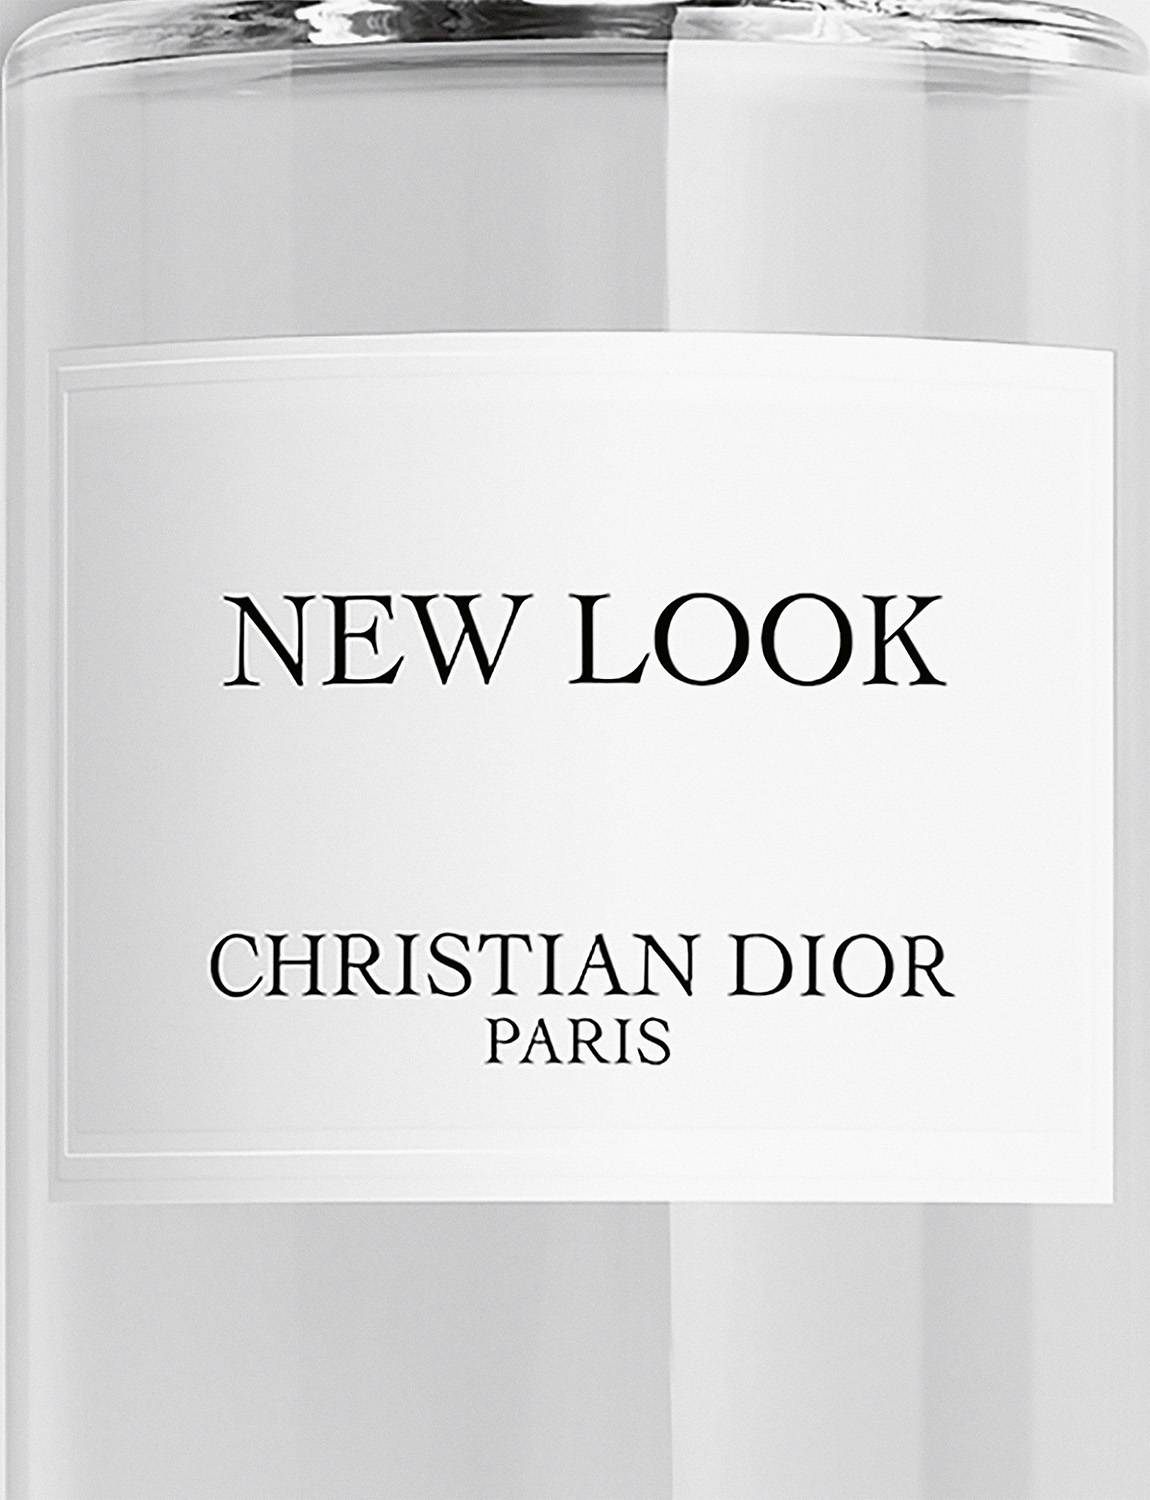 New Look, La Collection Privée, DIOR.